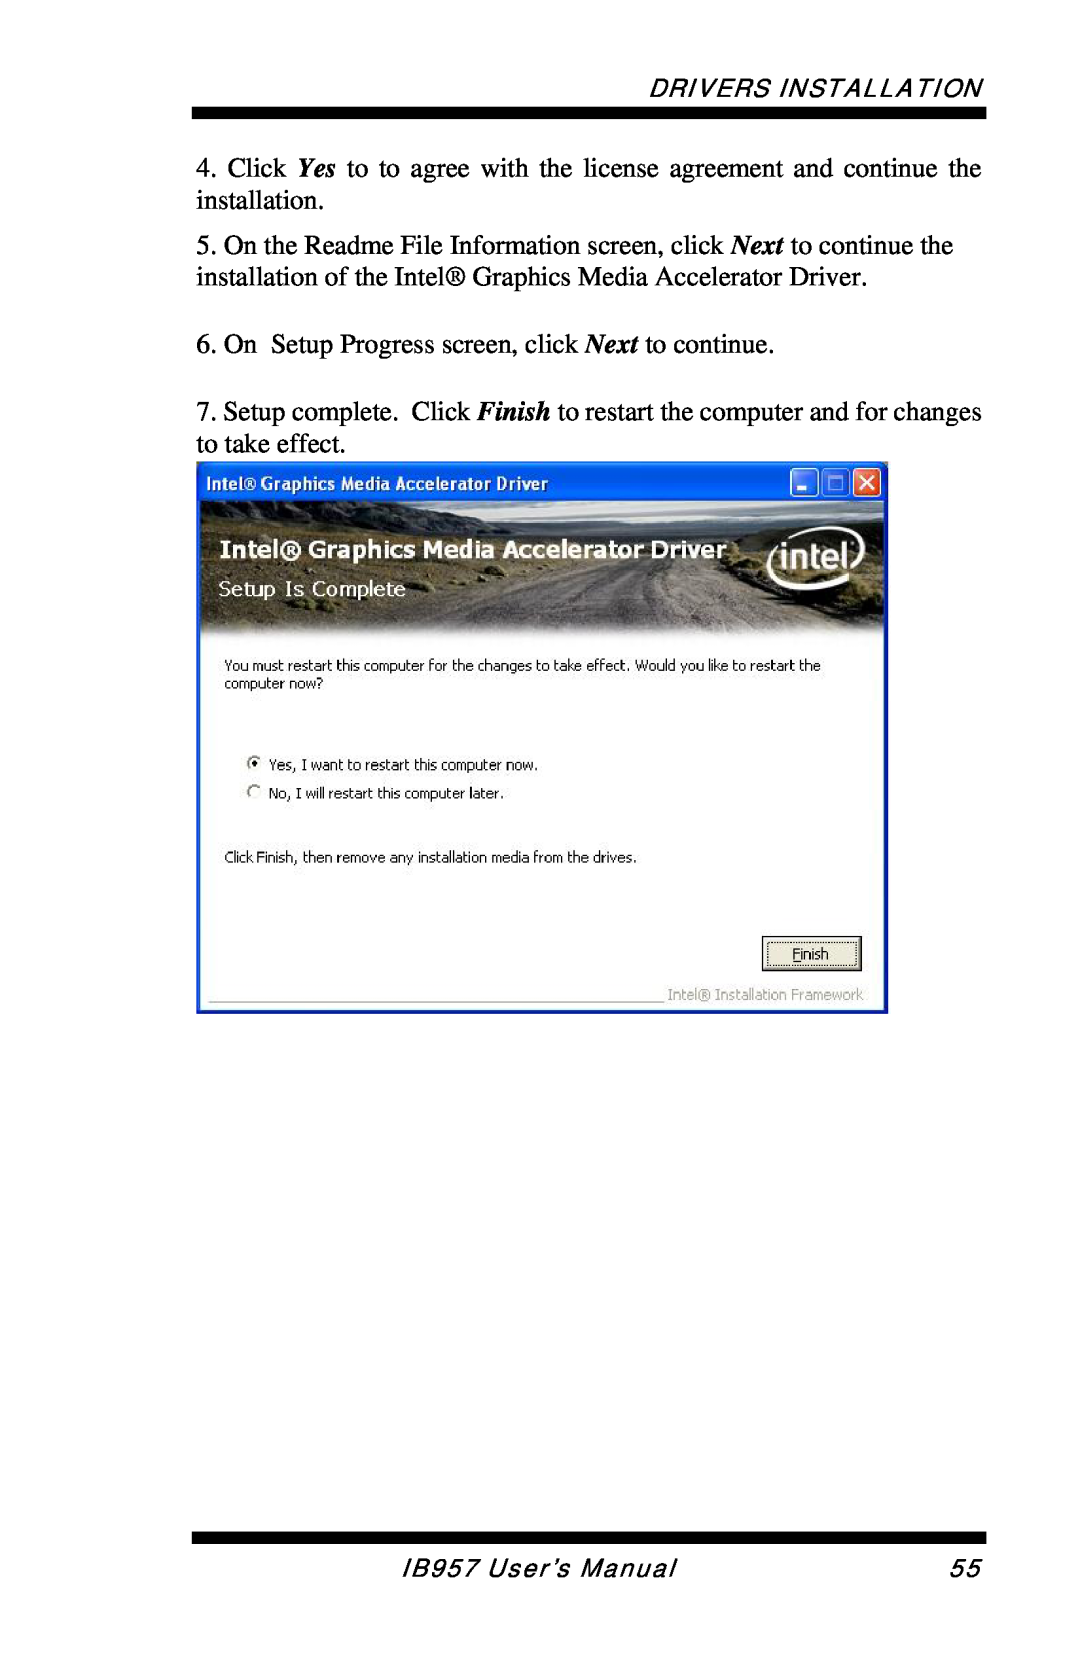 Intel IB957 user manual On Setup Progress screen, click Next to continue 